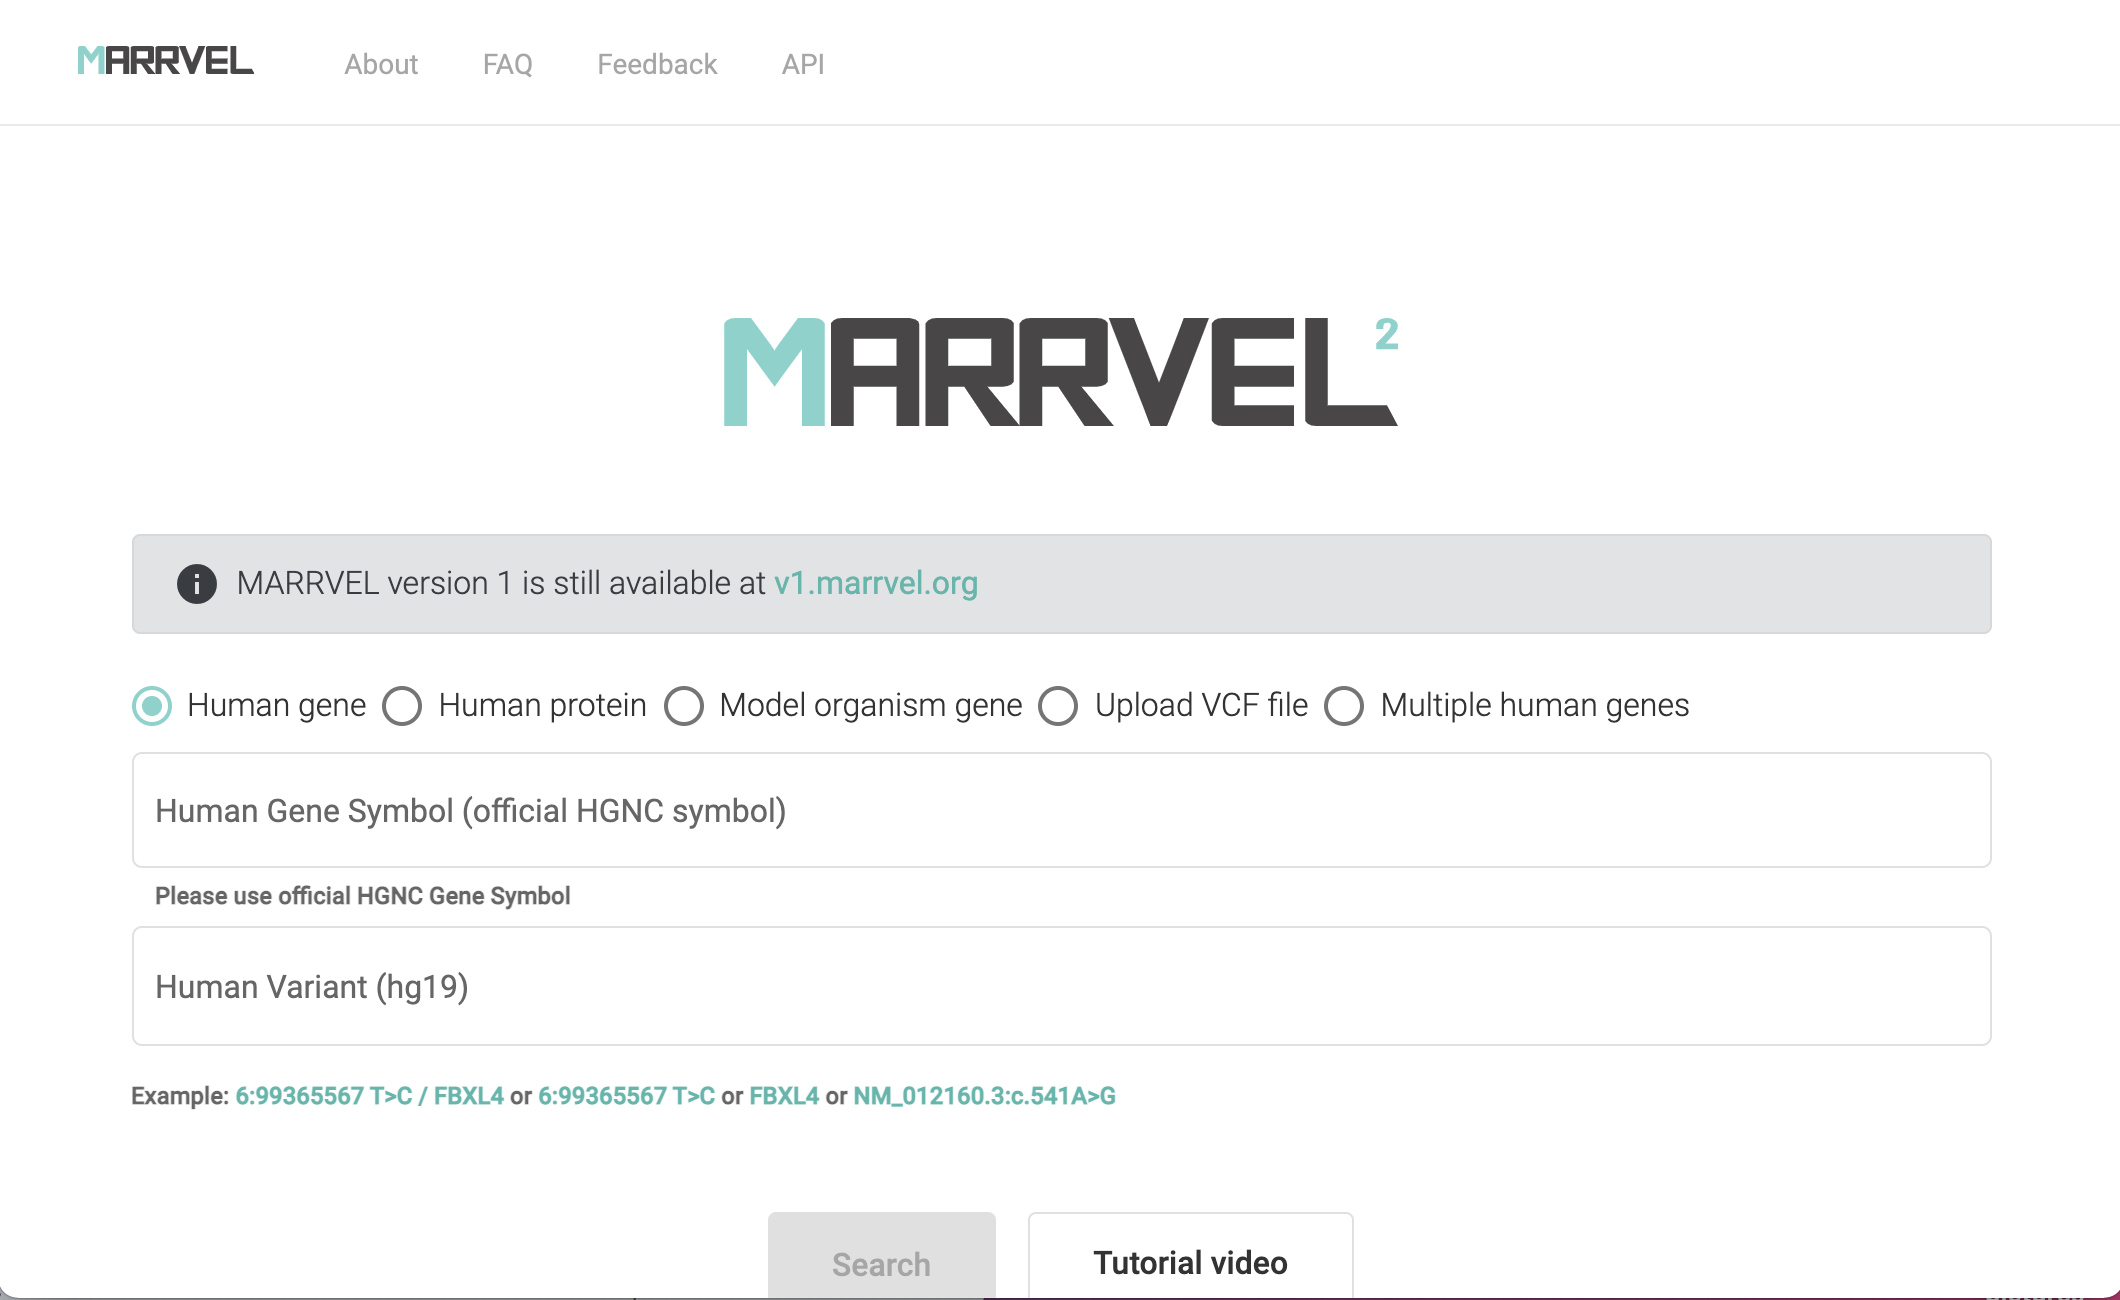 MARRVEL site image